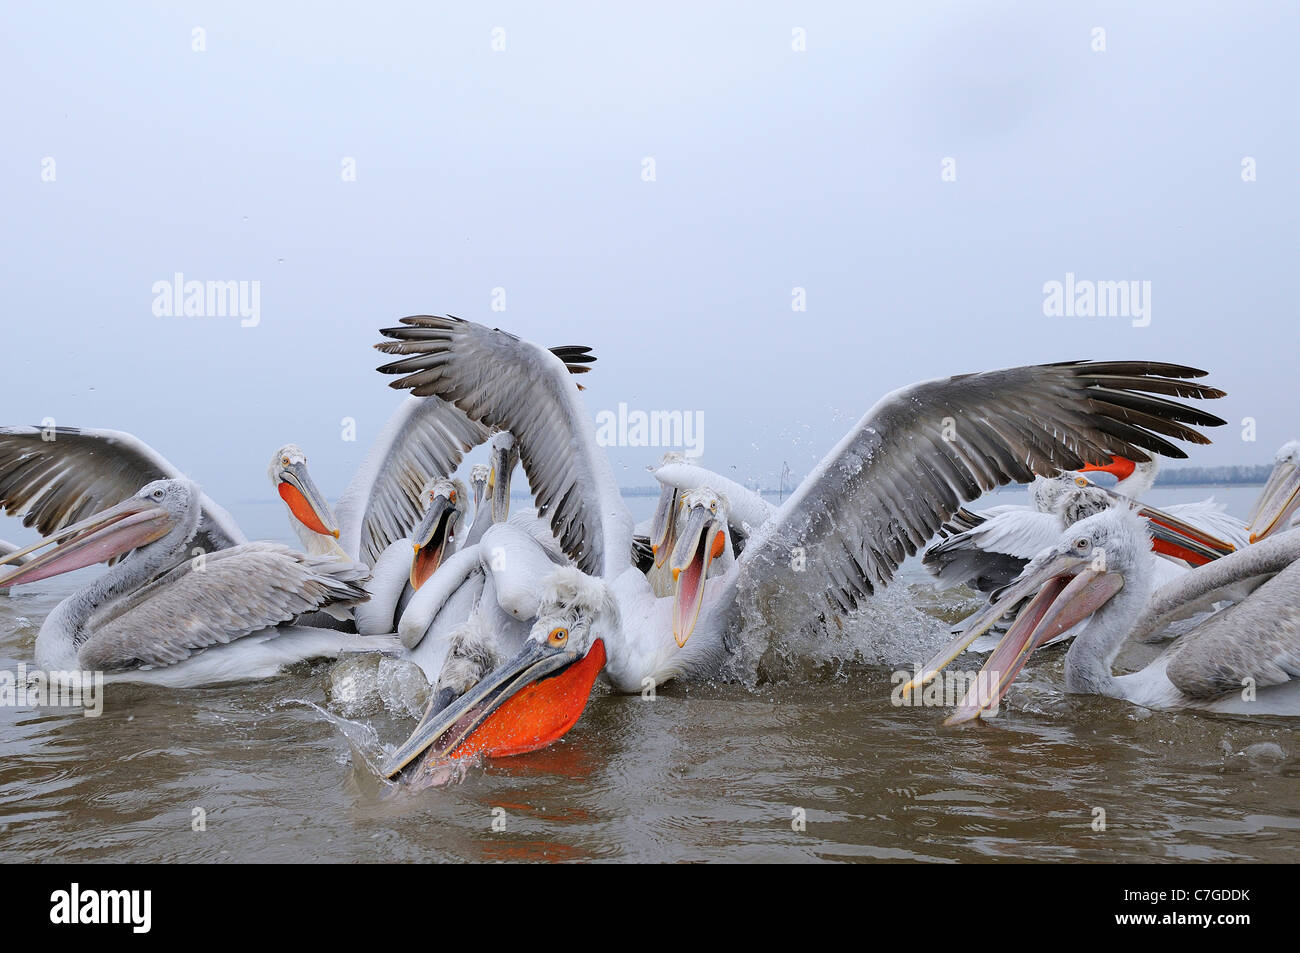 Dalmatian Pelican (Pelecanus crispus) group fighting over fish, Lake Kerkini, Greece Stock Photo